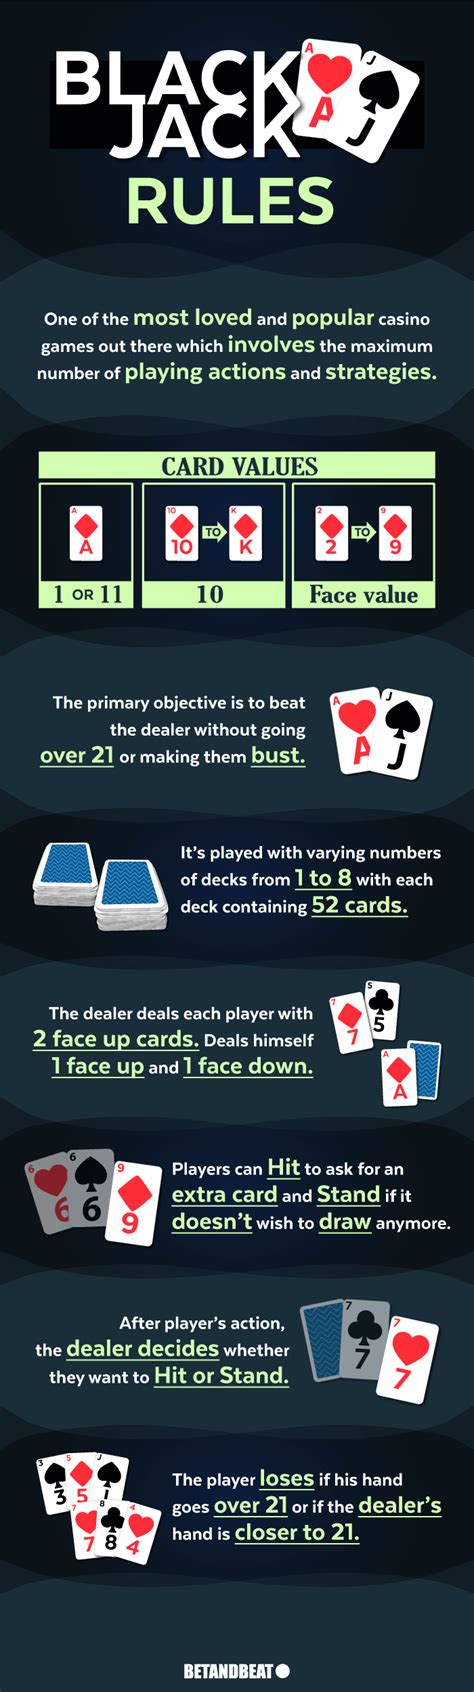 blackjack deck rules